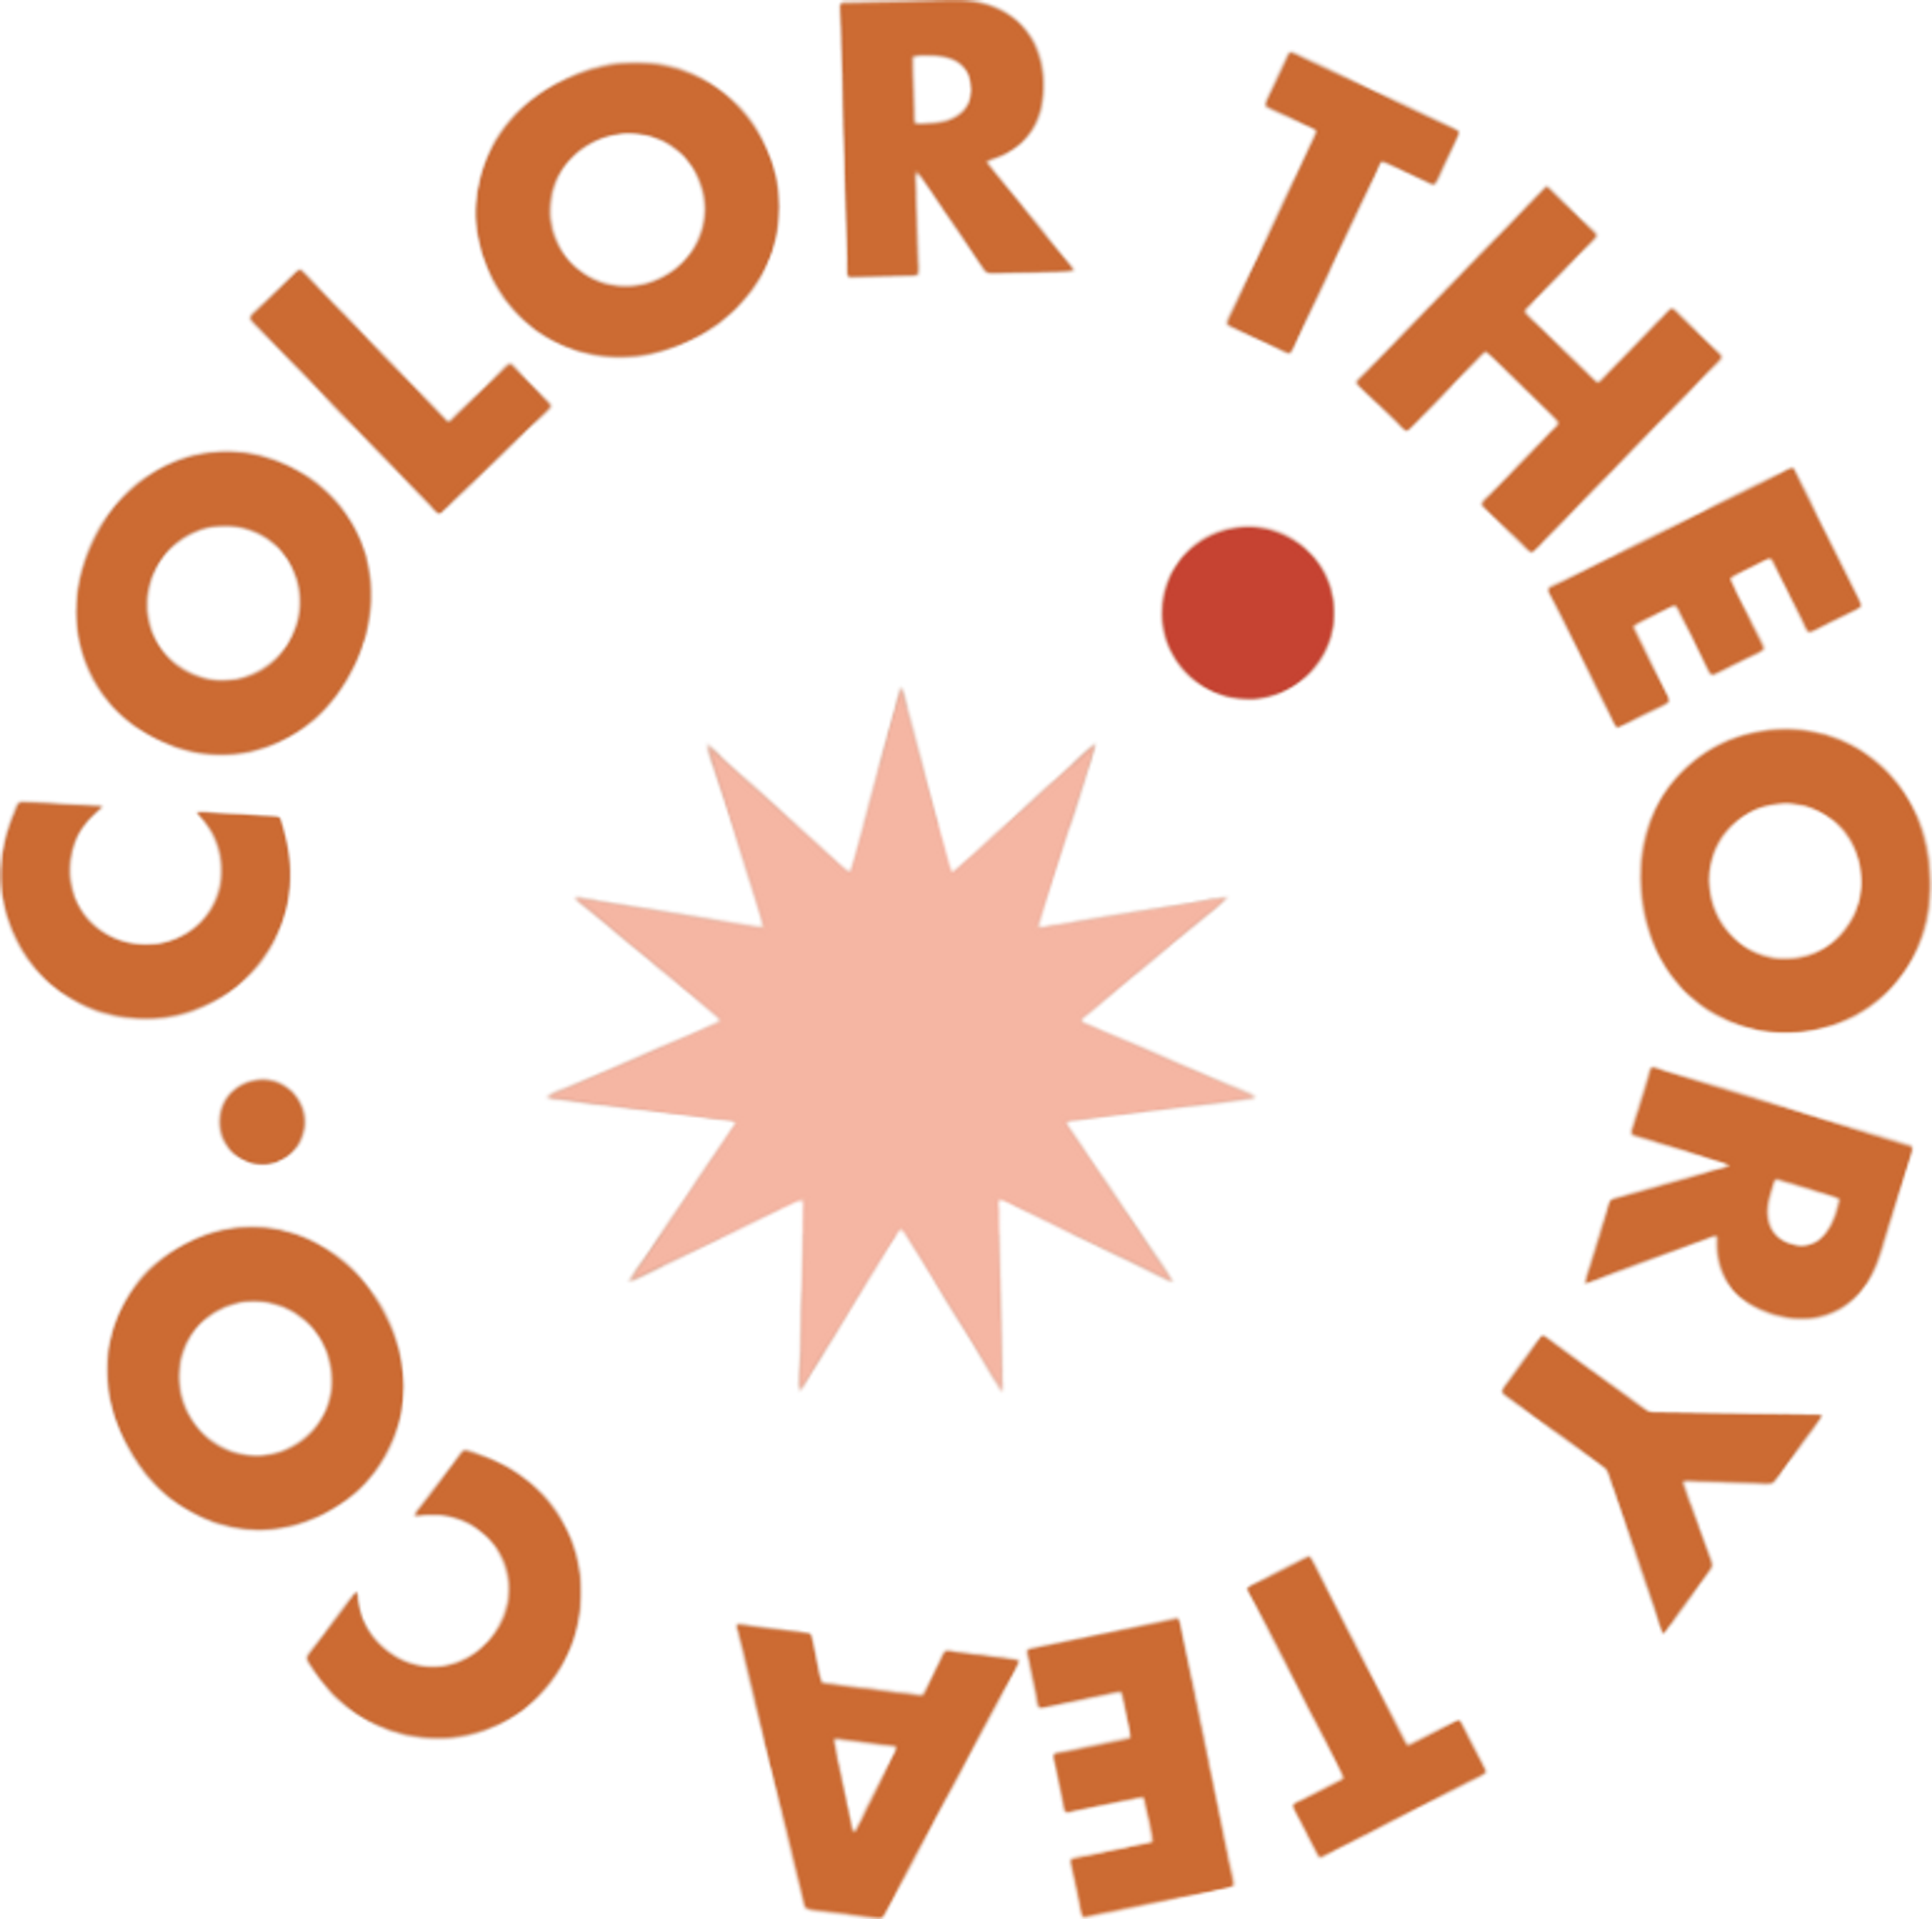 colortheorytea